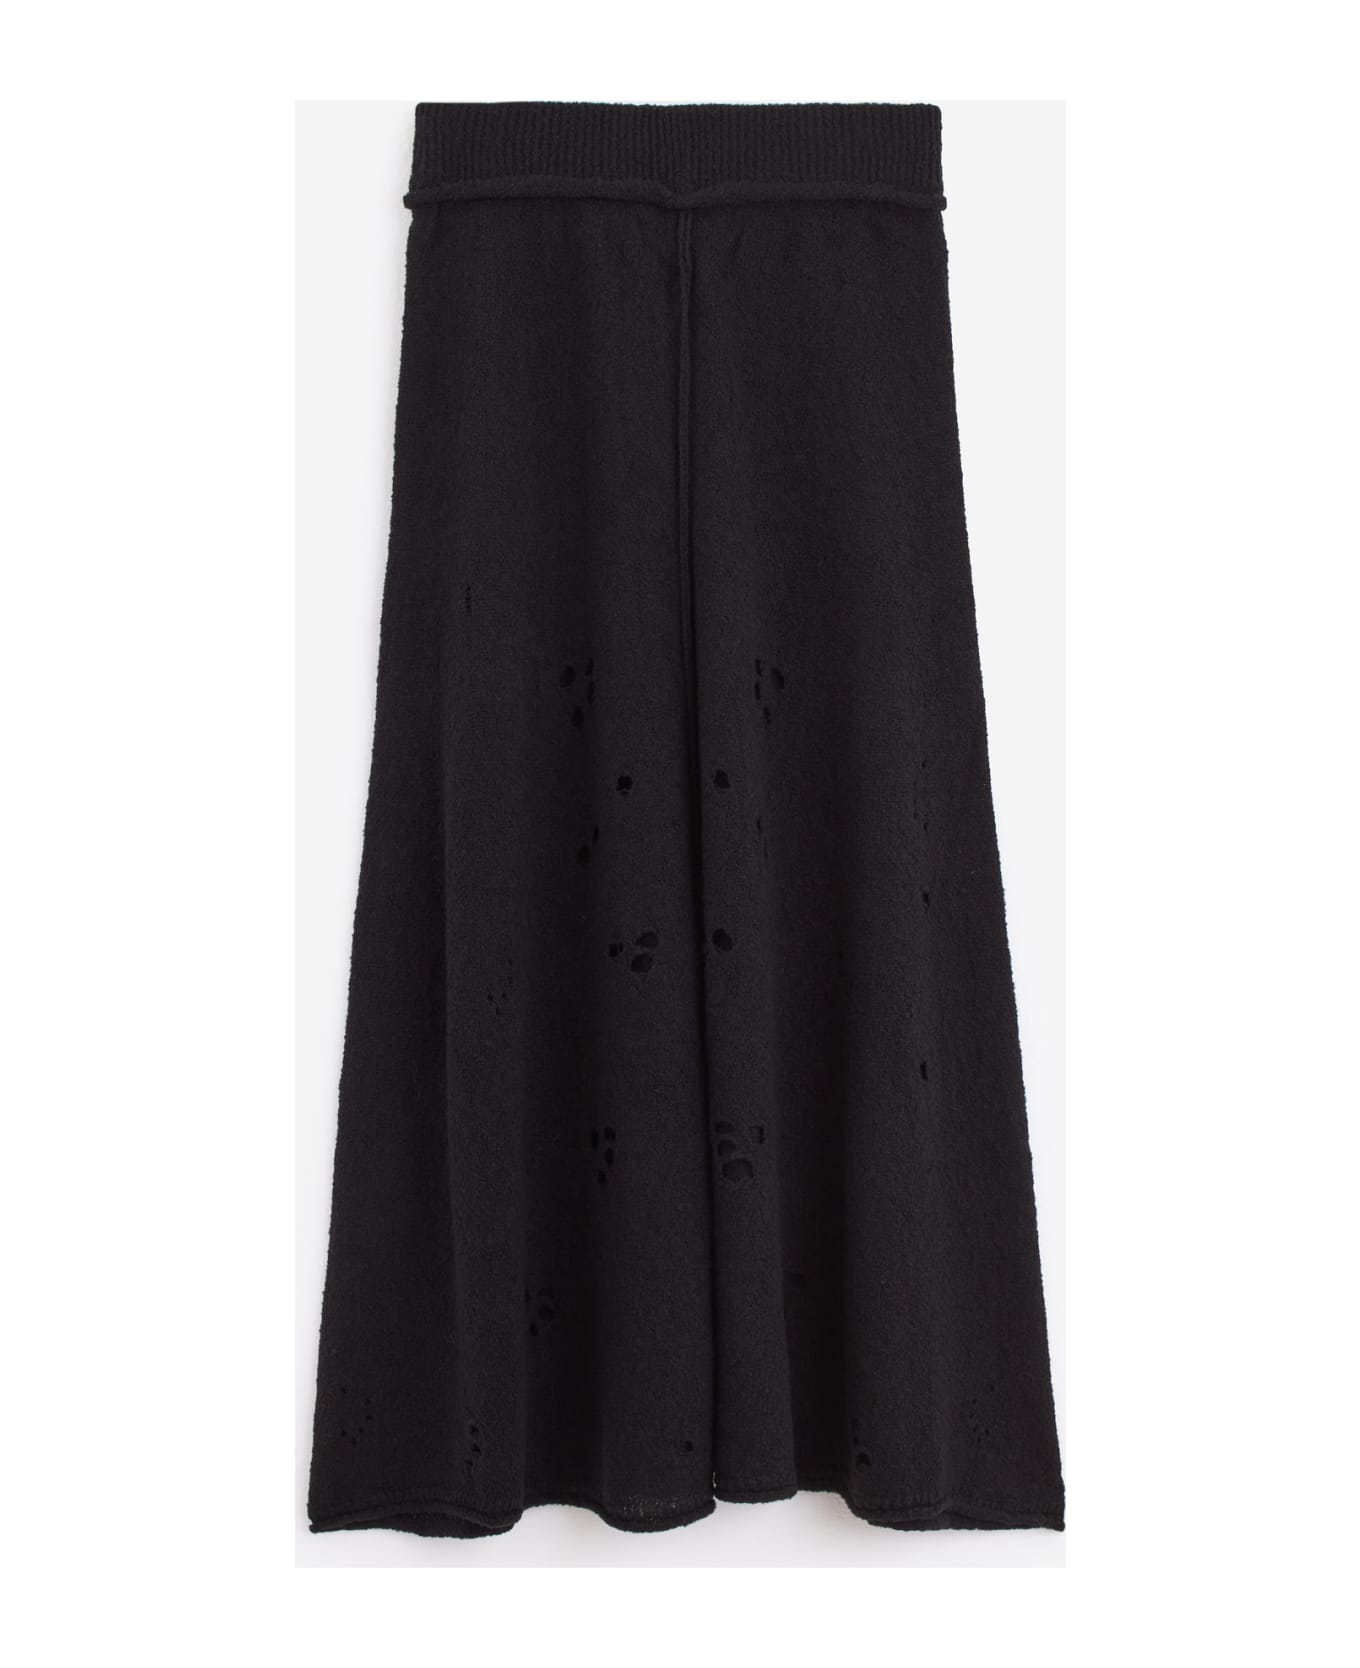 Rus Skirt - black スカート